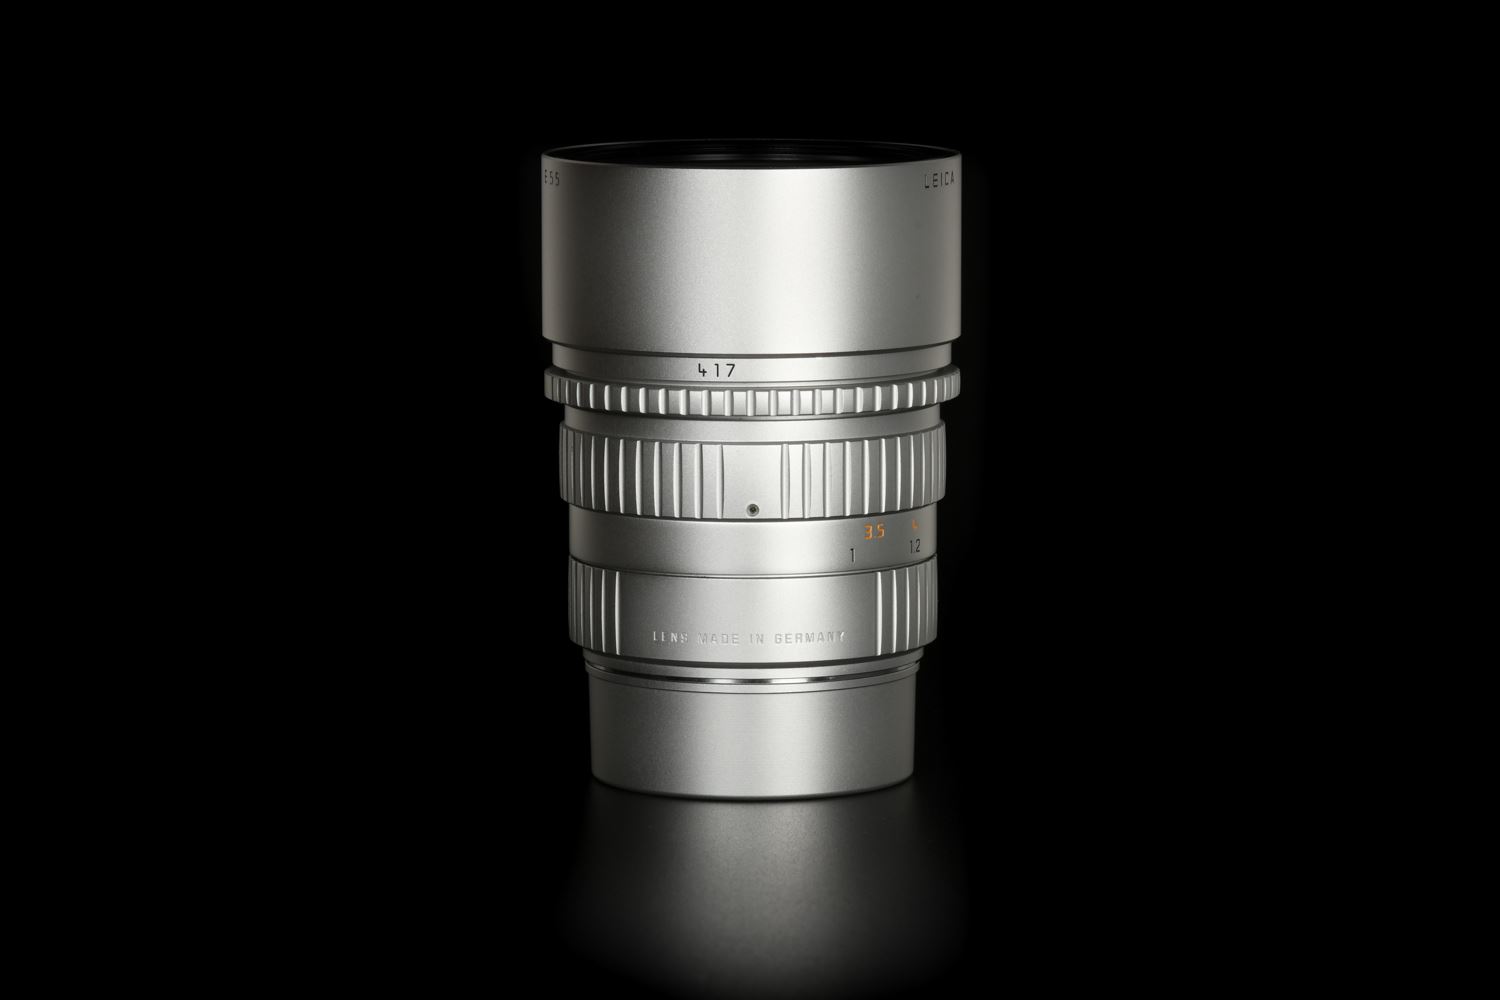 Picture of Leica M9-P ‘Edition Hermes' - Série Limitée Jean-Louis Dumas with Summicron 28mm f/2 ASPH, Noctilux 50mm f/0.95 ASPH, APO-Summmicron 90mm f/2 ASPH